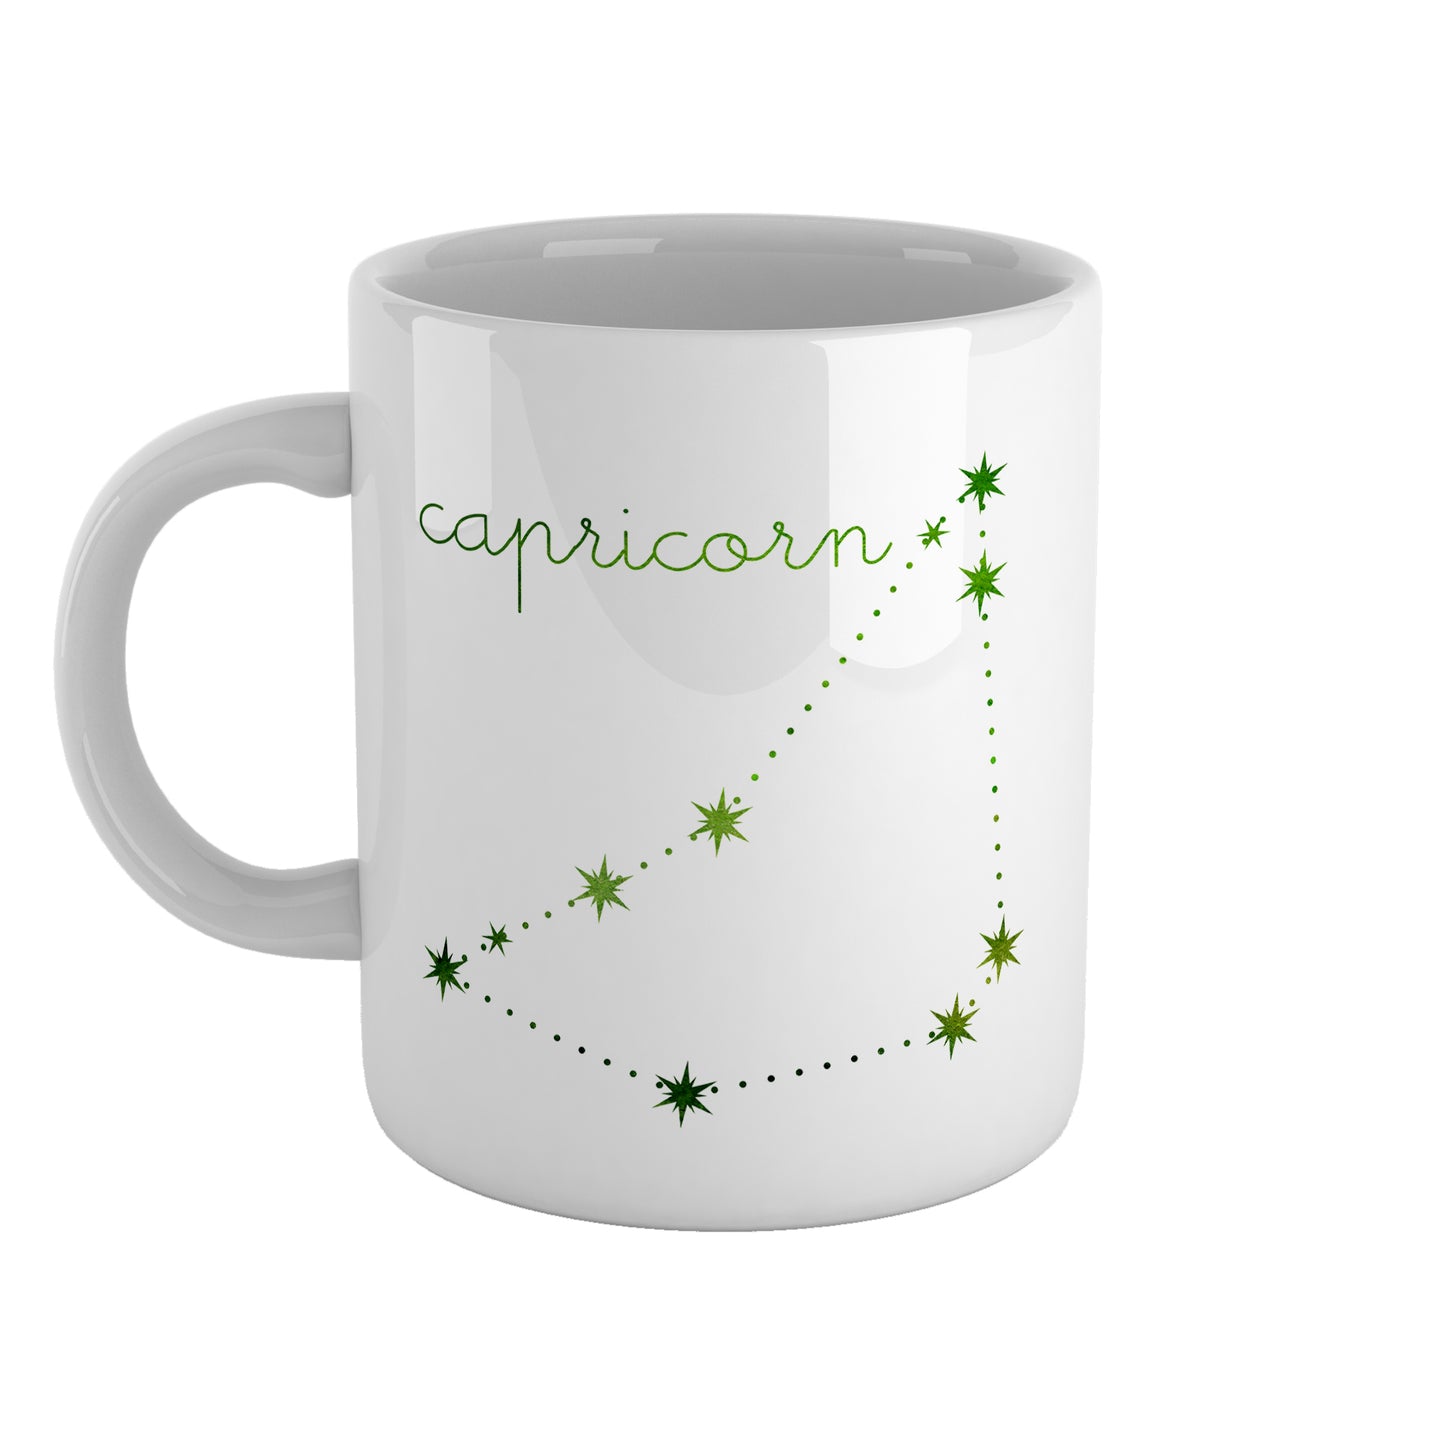 Capricorn constellation | Ceramic mug